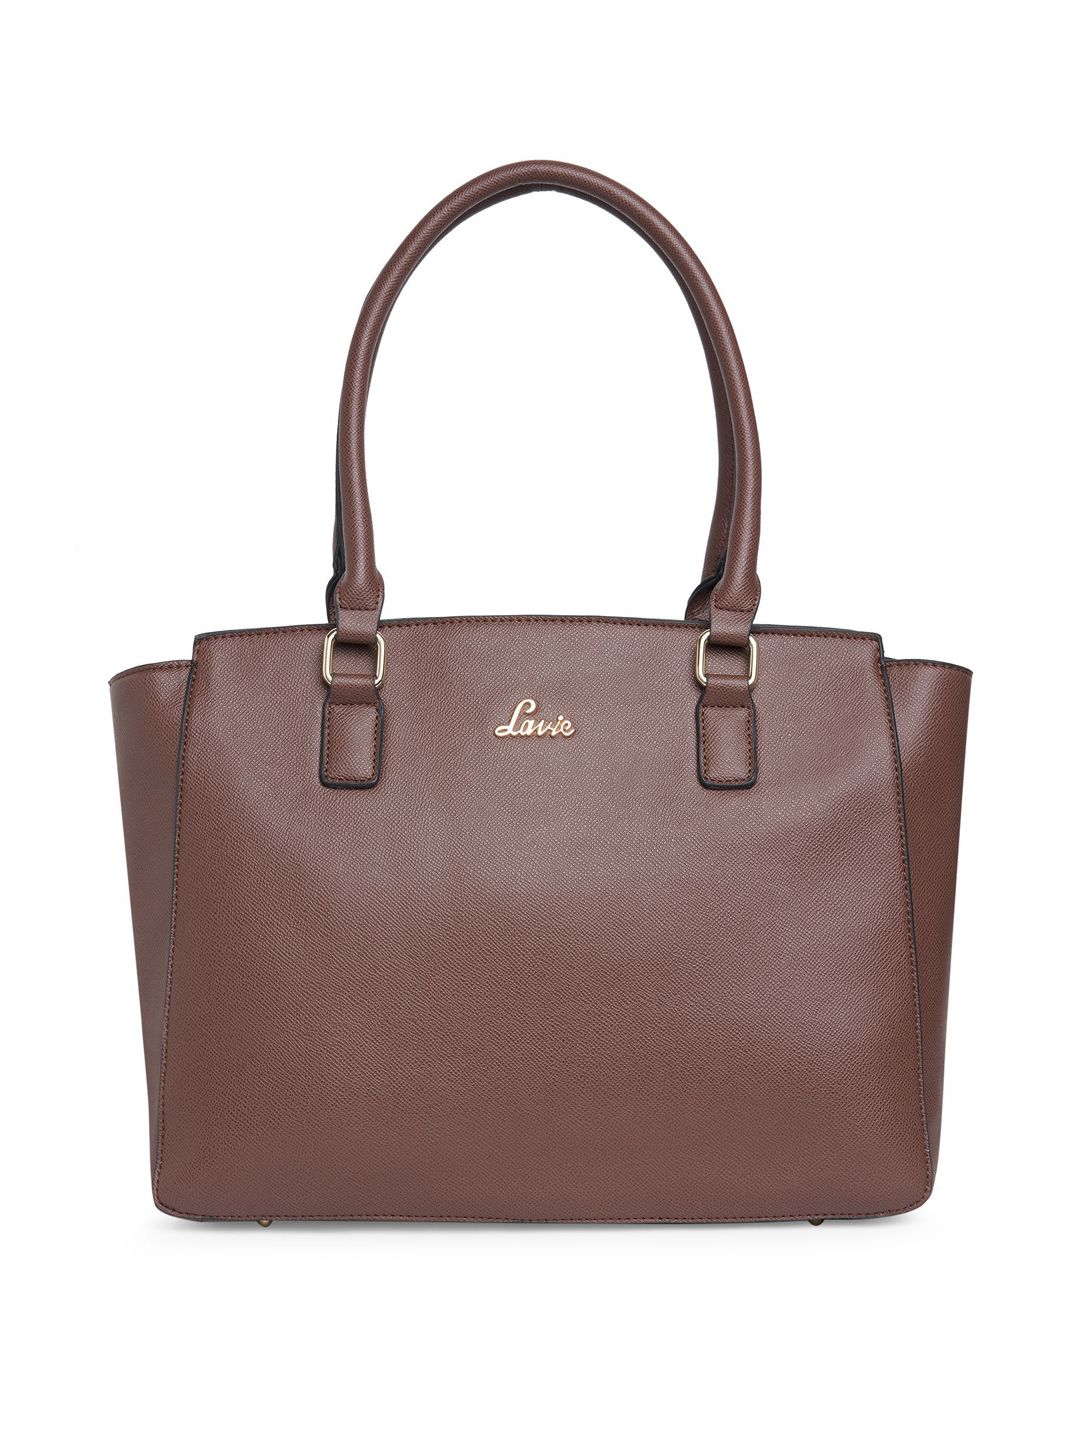 Lavie Brown Structured Shoulder Bag Price in India